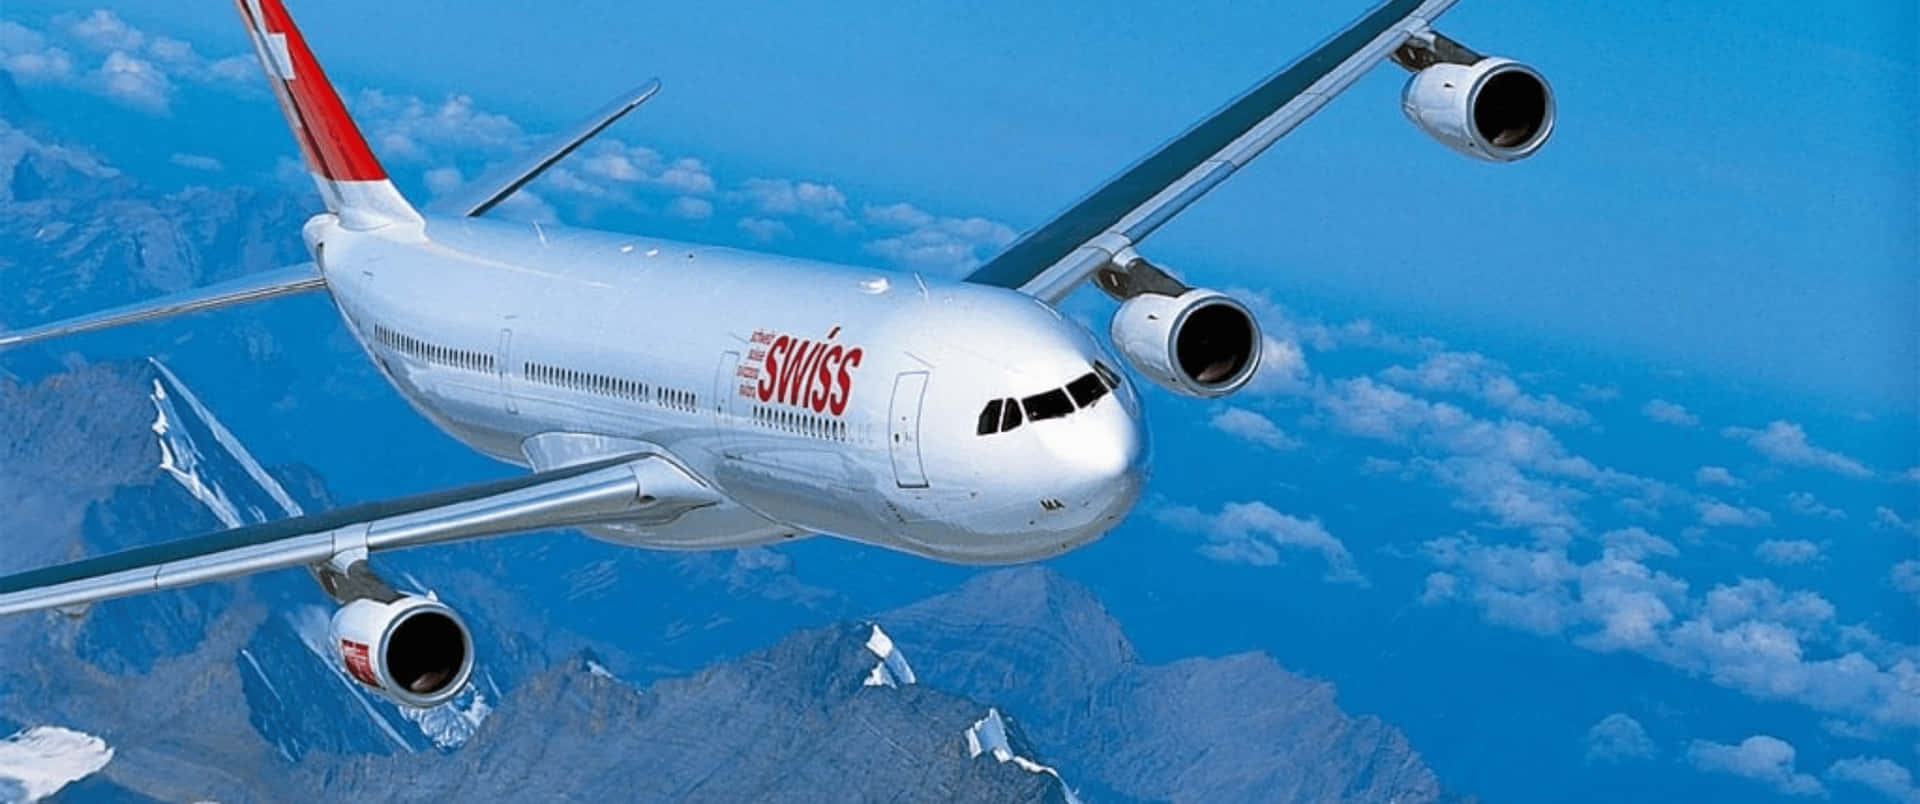 3440x1440p Plane Swiss International Background